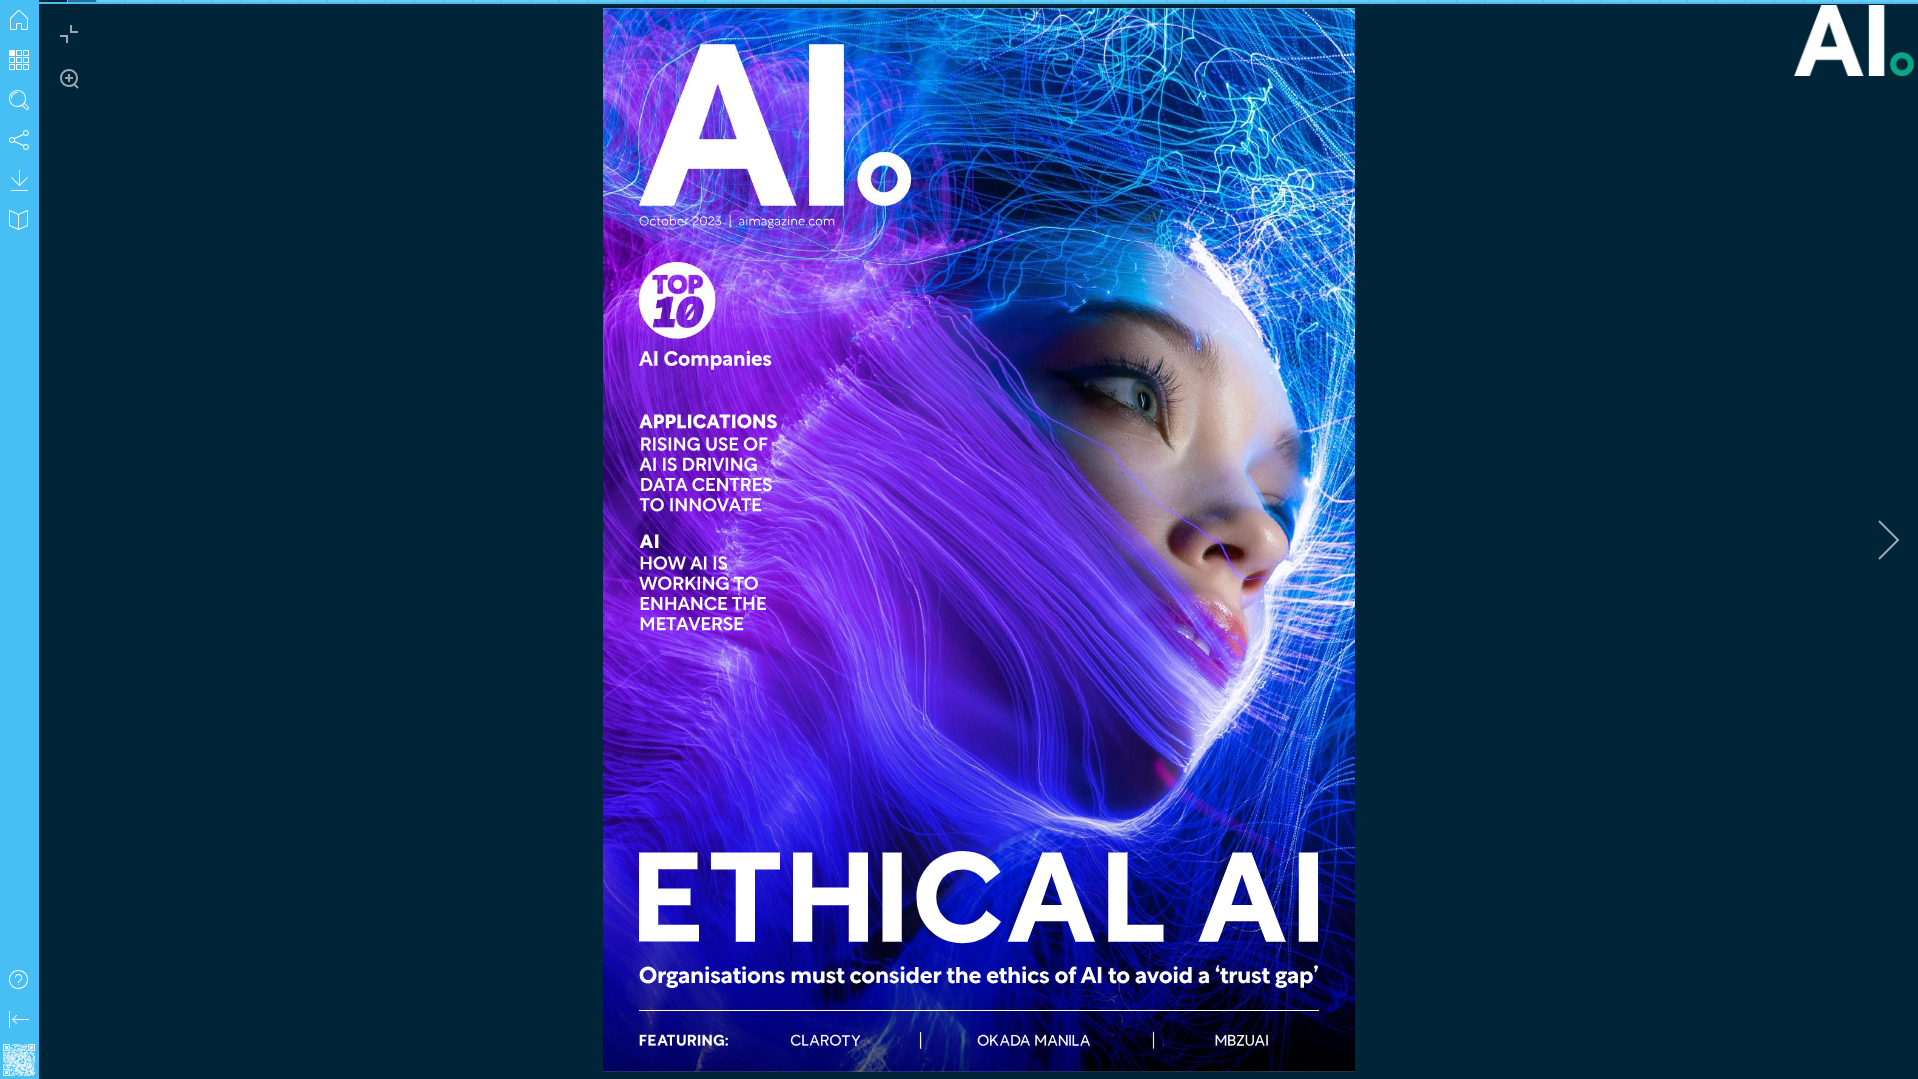 BizClik Media's AI Magazine